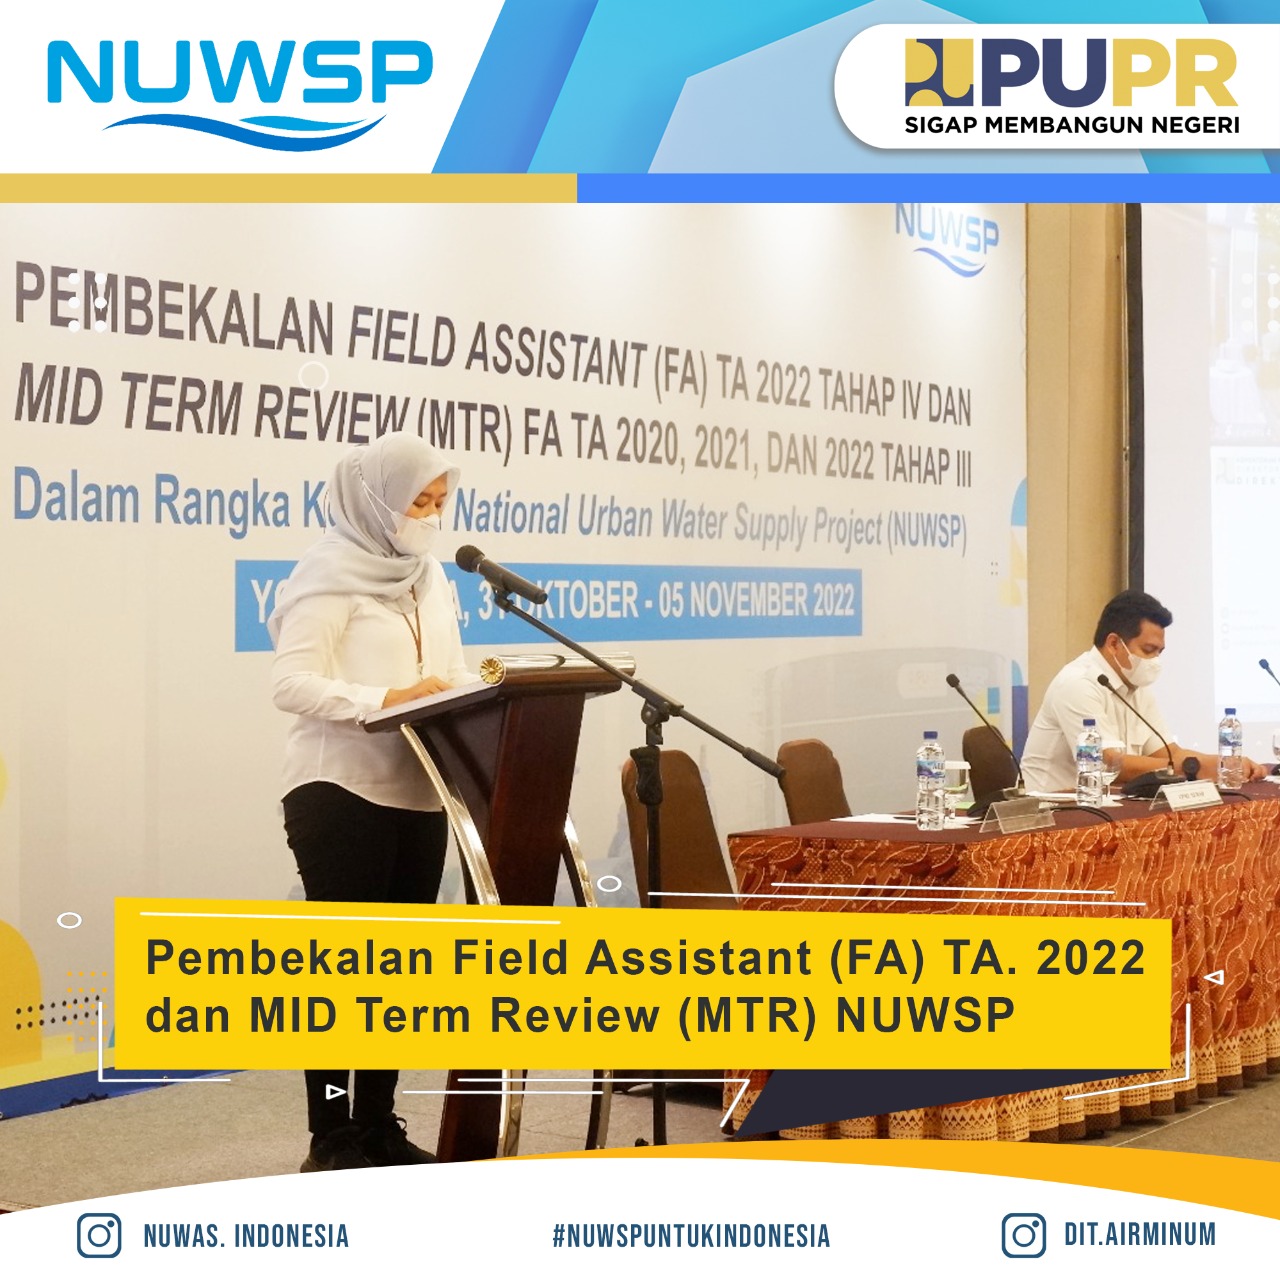 Pembekalan Field Assistant (FA) TA. 2022 dan MID Term Review (MTR) NUWSP